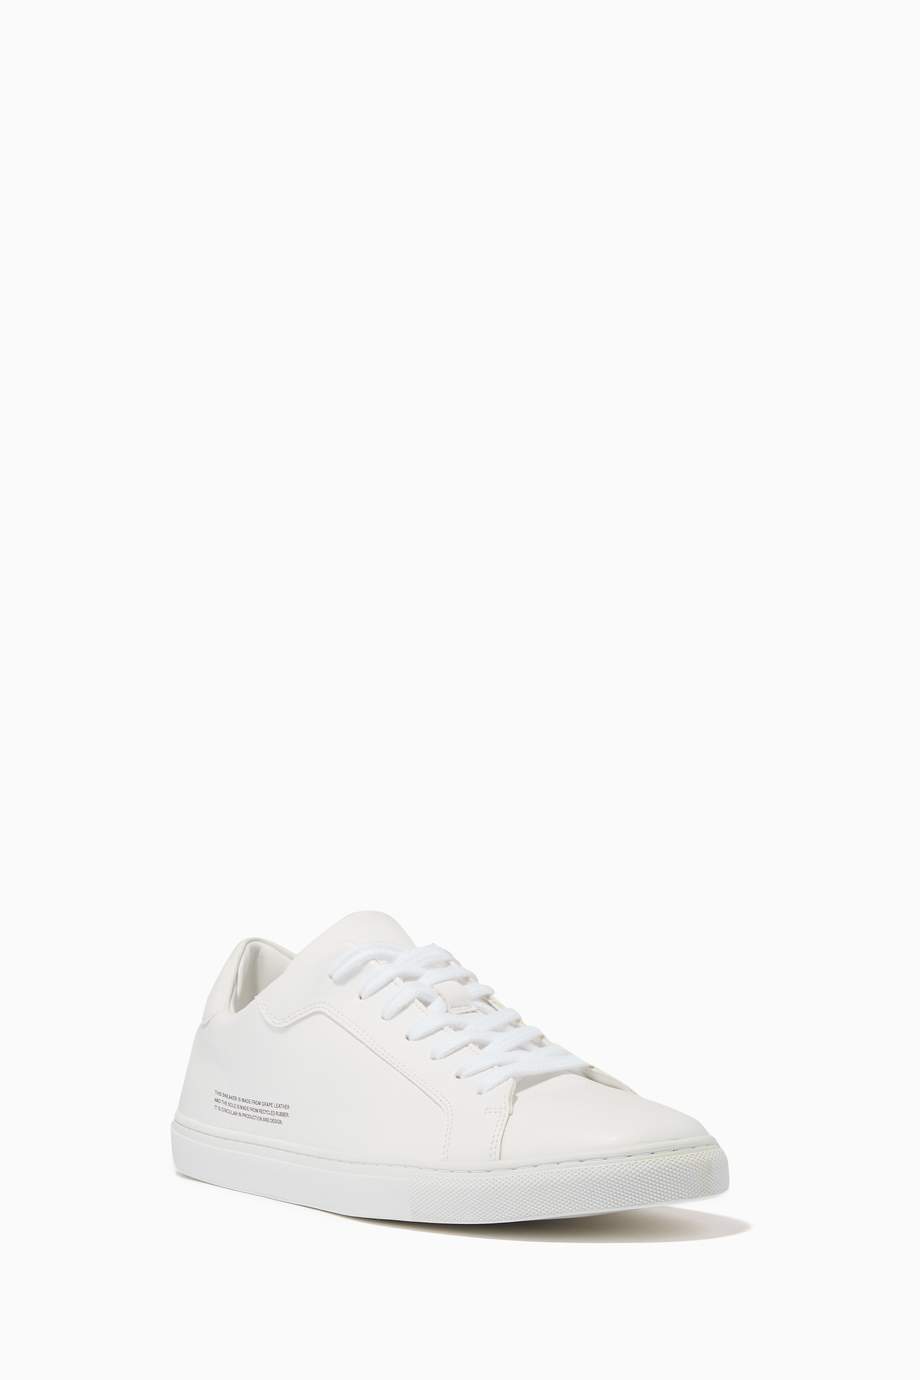 Shop PANGAIA White Grape Leather Sneakers for Men | Ounass UAE